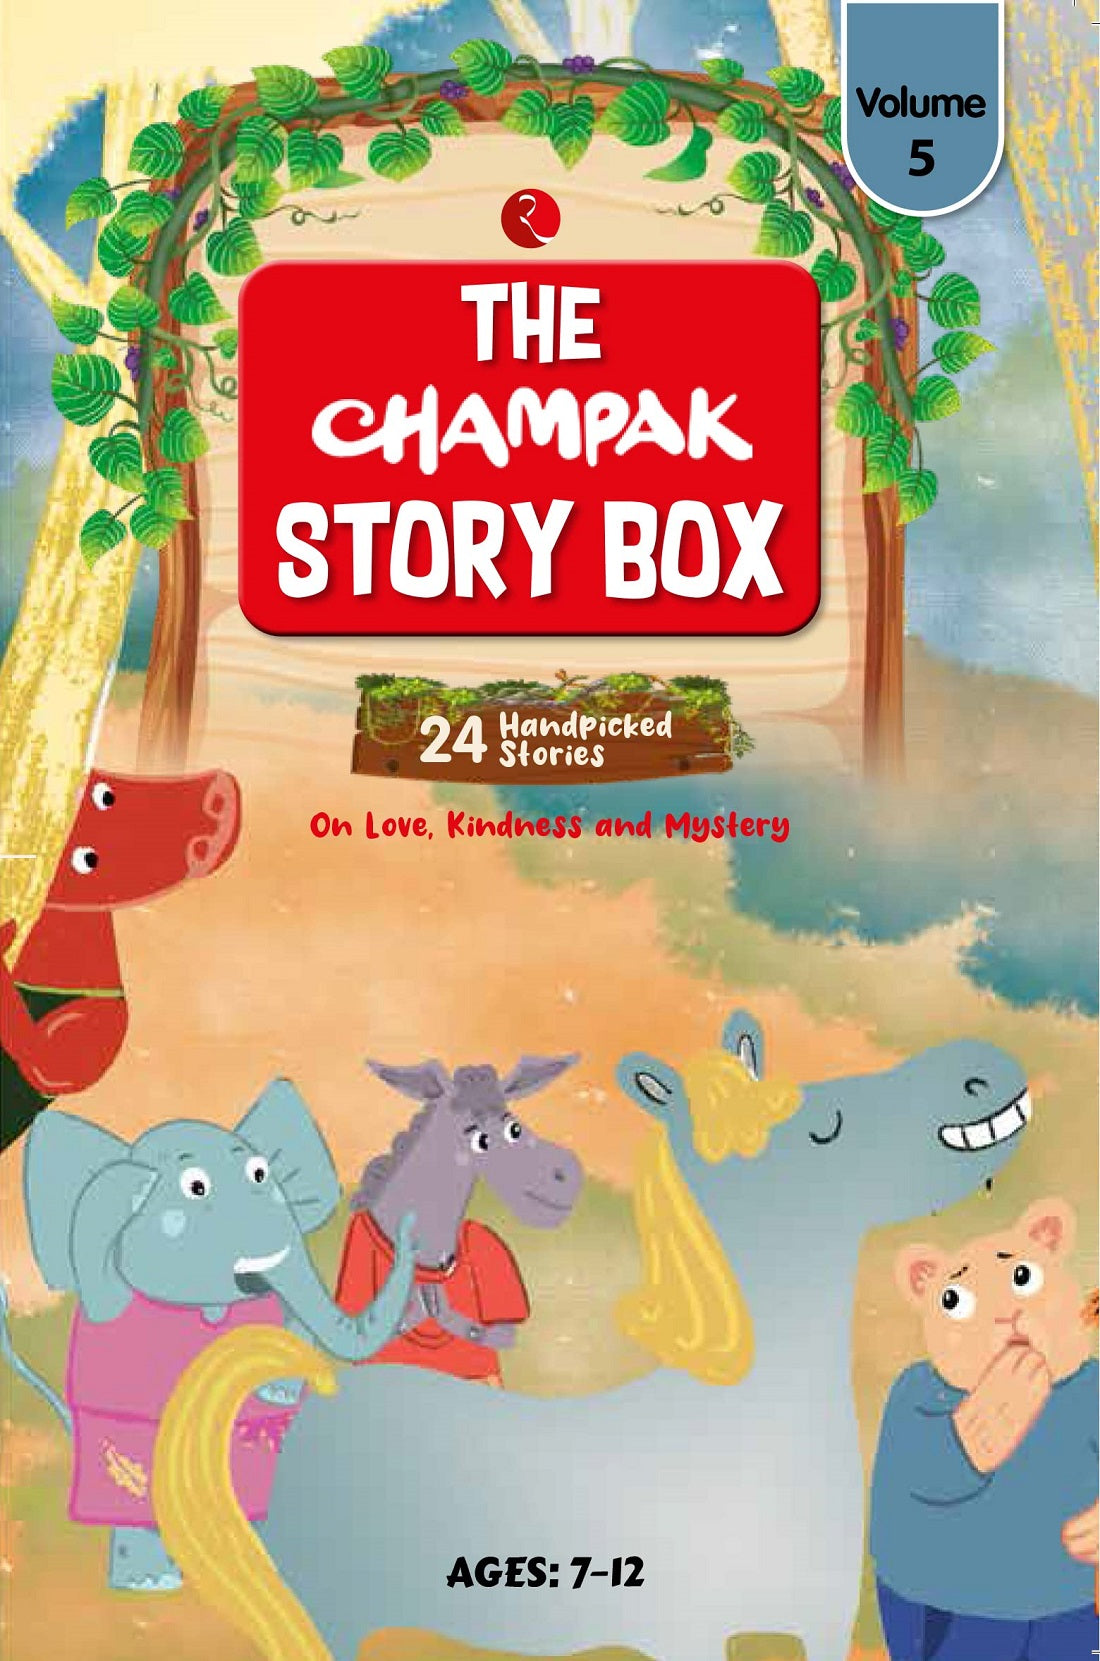 THE CHAMPAK STORY BOX VOL 5